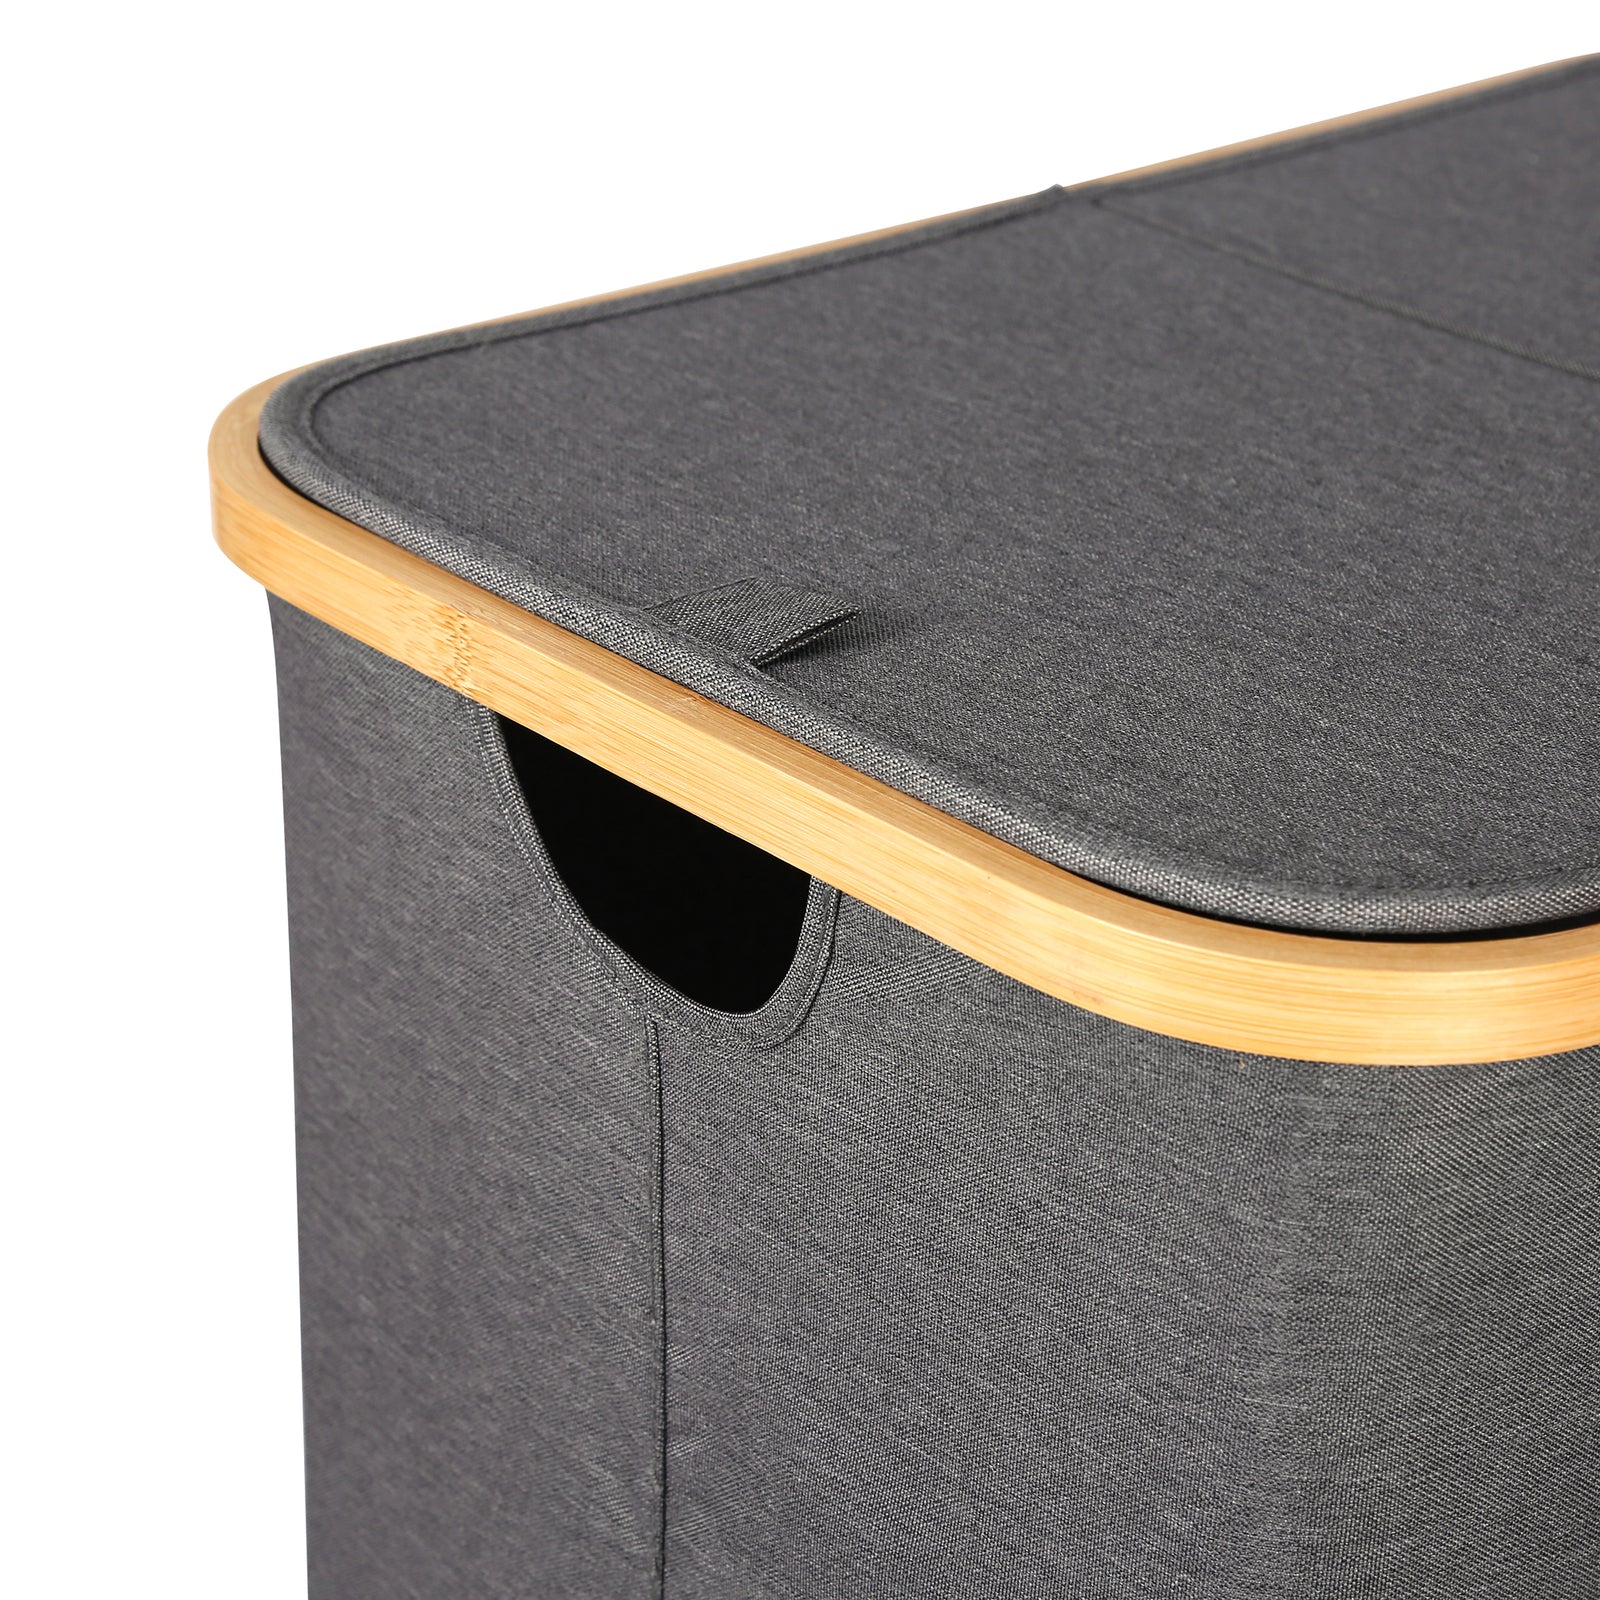 Ringle Bamboo Laundry Hamper Foldable Storage Basket - SILBERSHELL